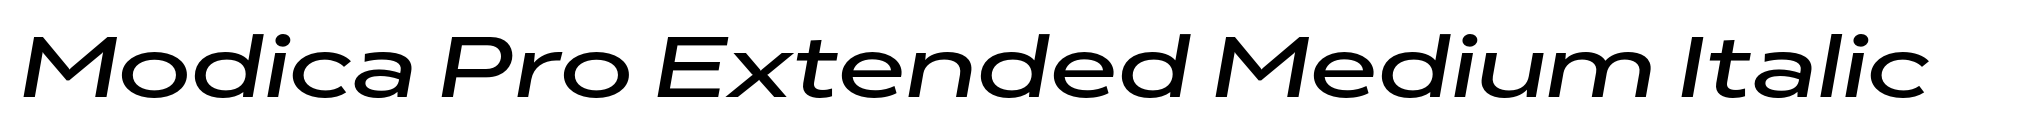 Modica Pro Extended Medium Italic image